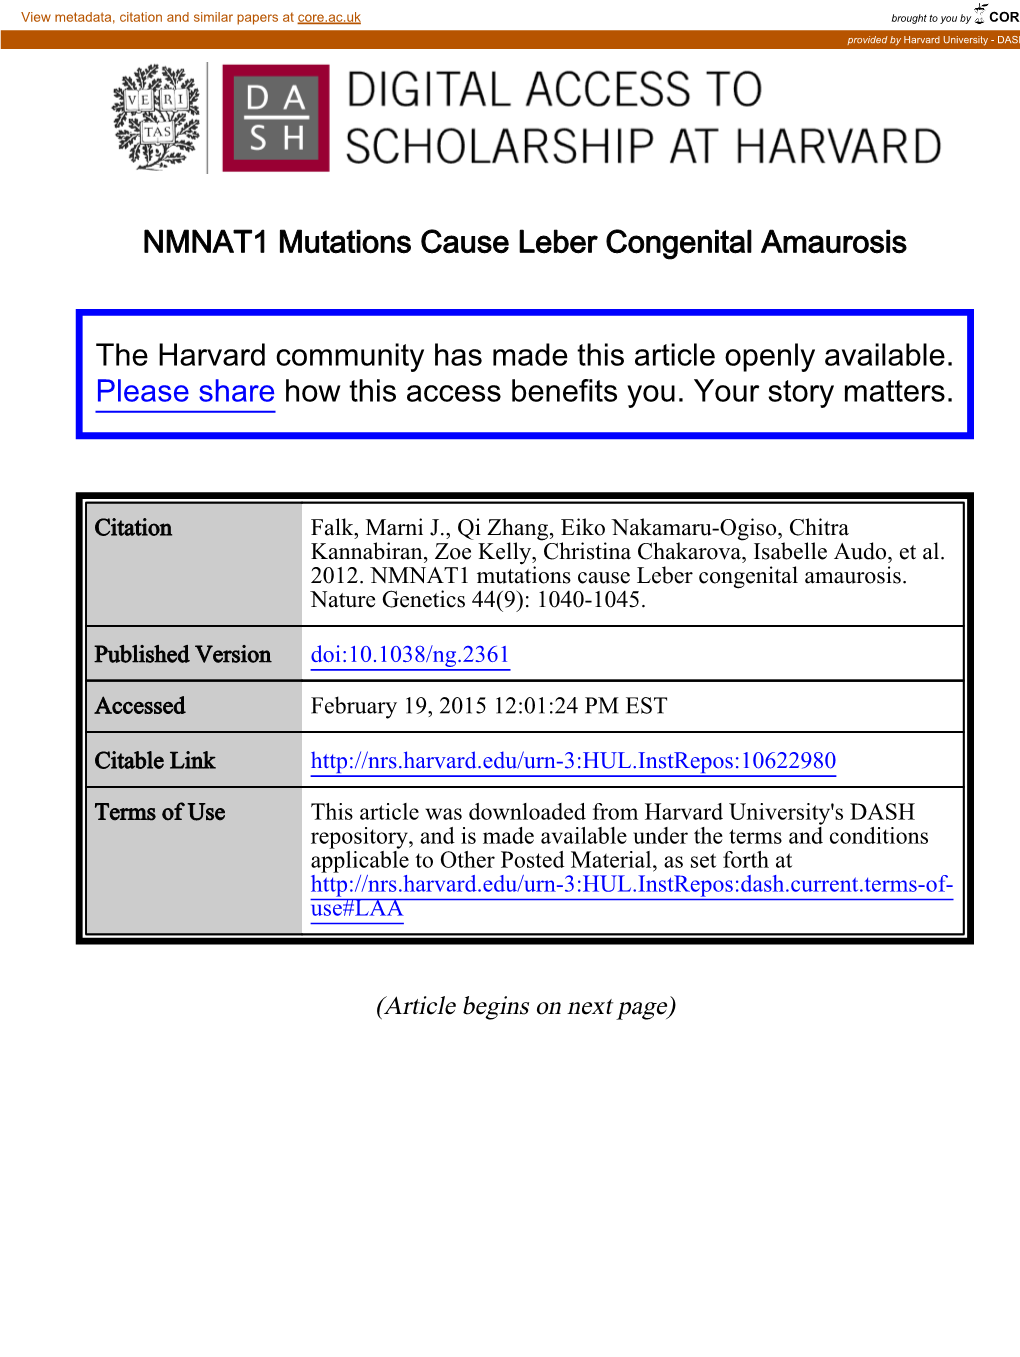 NMNAT1 Mutations Cause Leber Congenital Amaurosis the Harvard